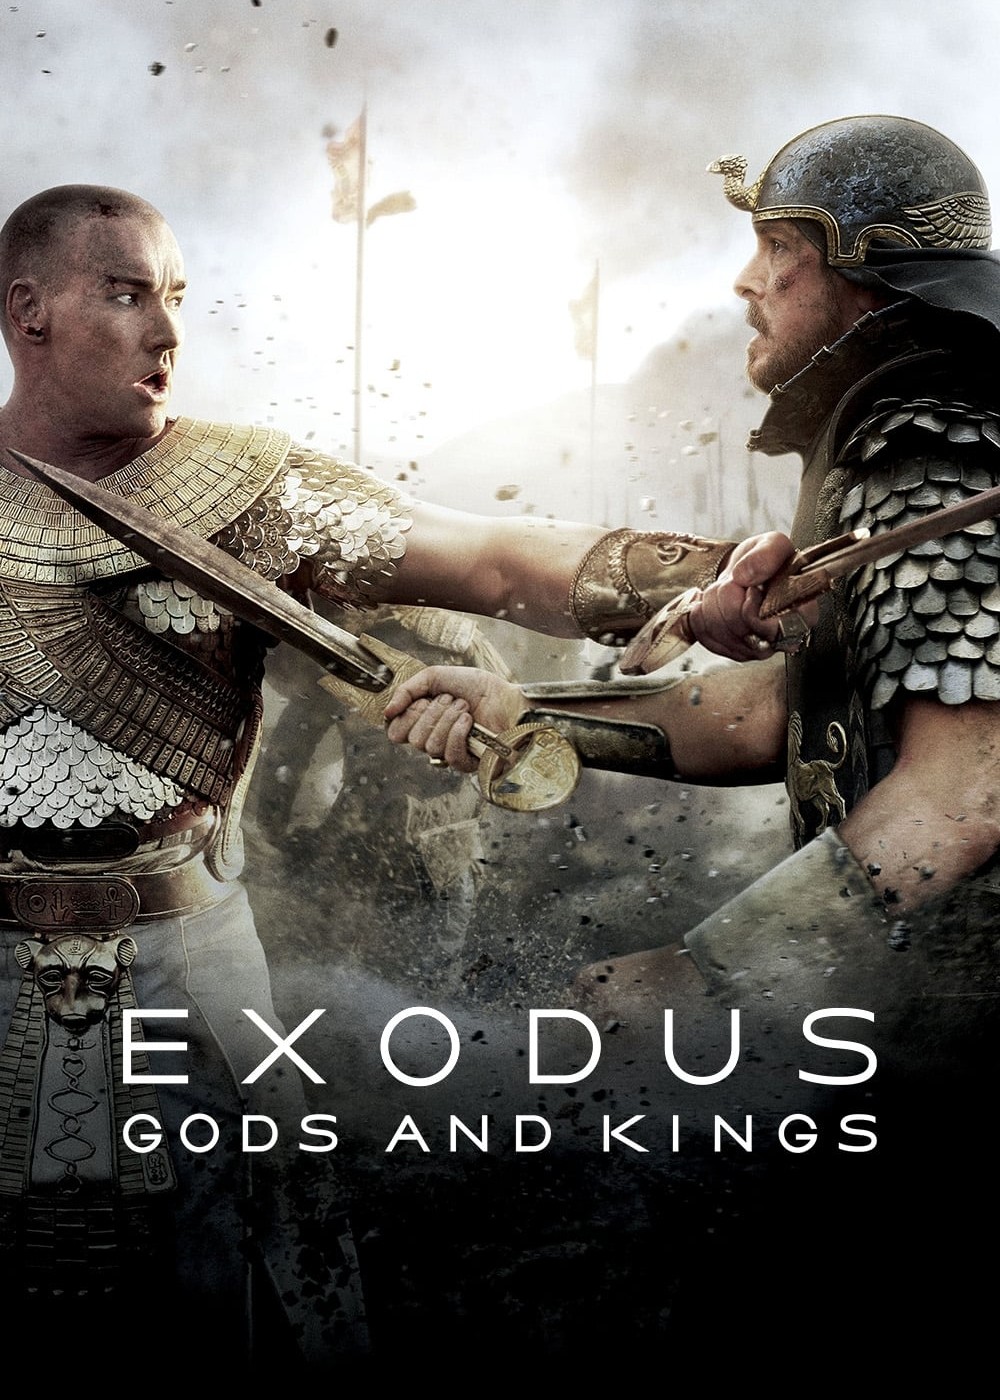 Exodus: Cuộc Chiến Chống Pharaoh - Exodus: Cuộc Chiến Chống Pharaoh (2014)